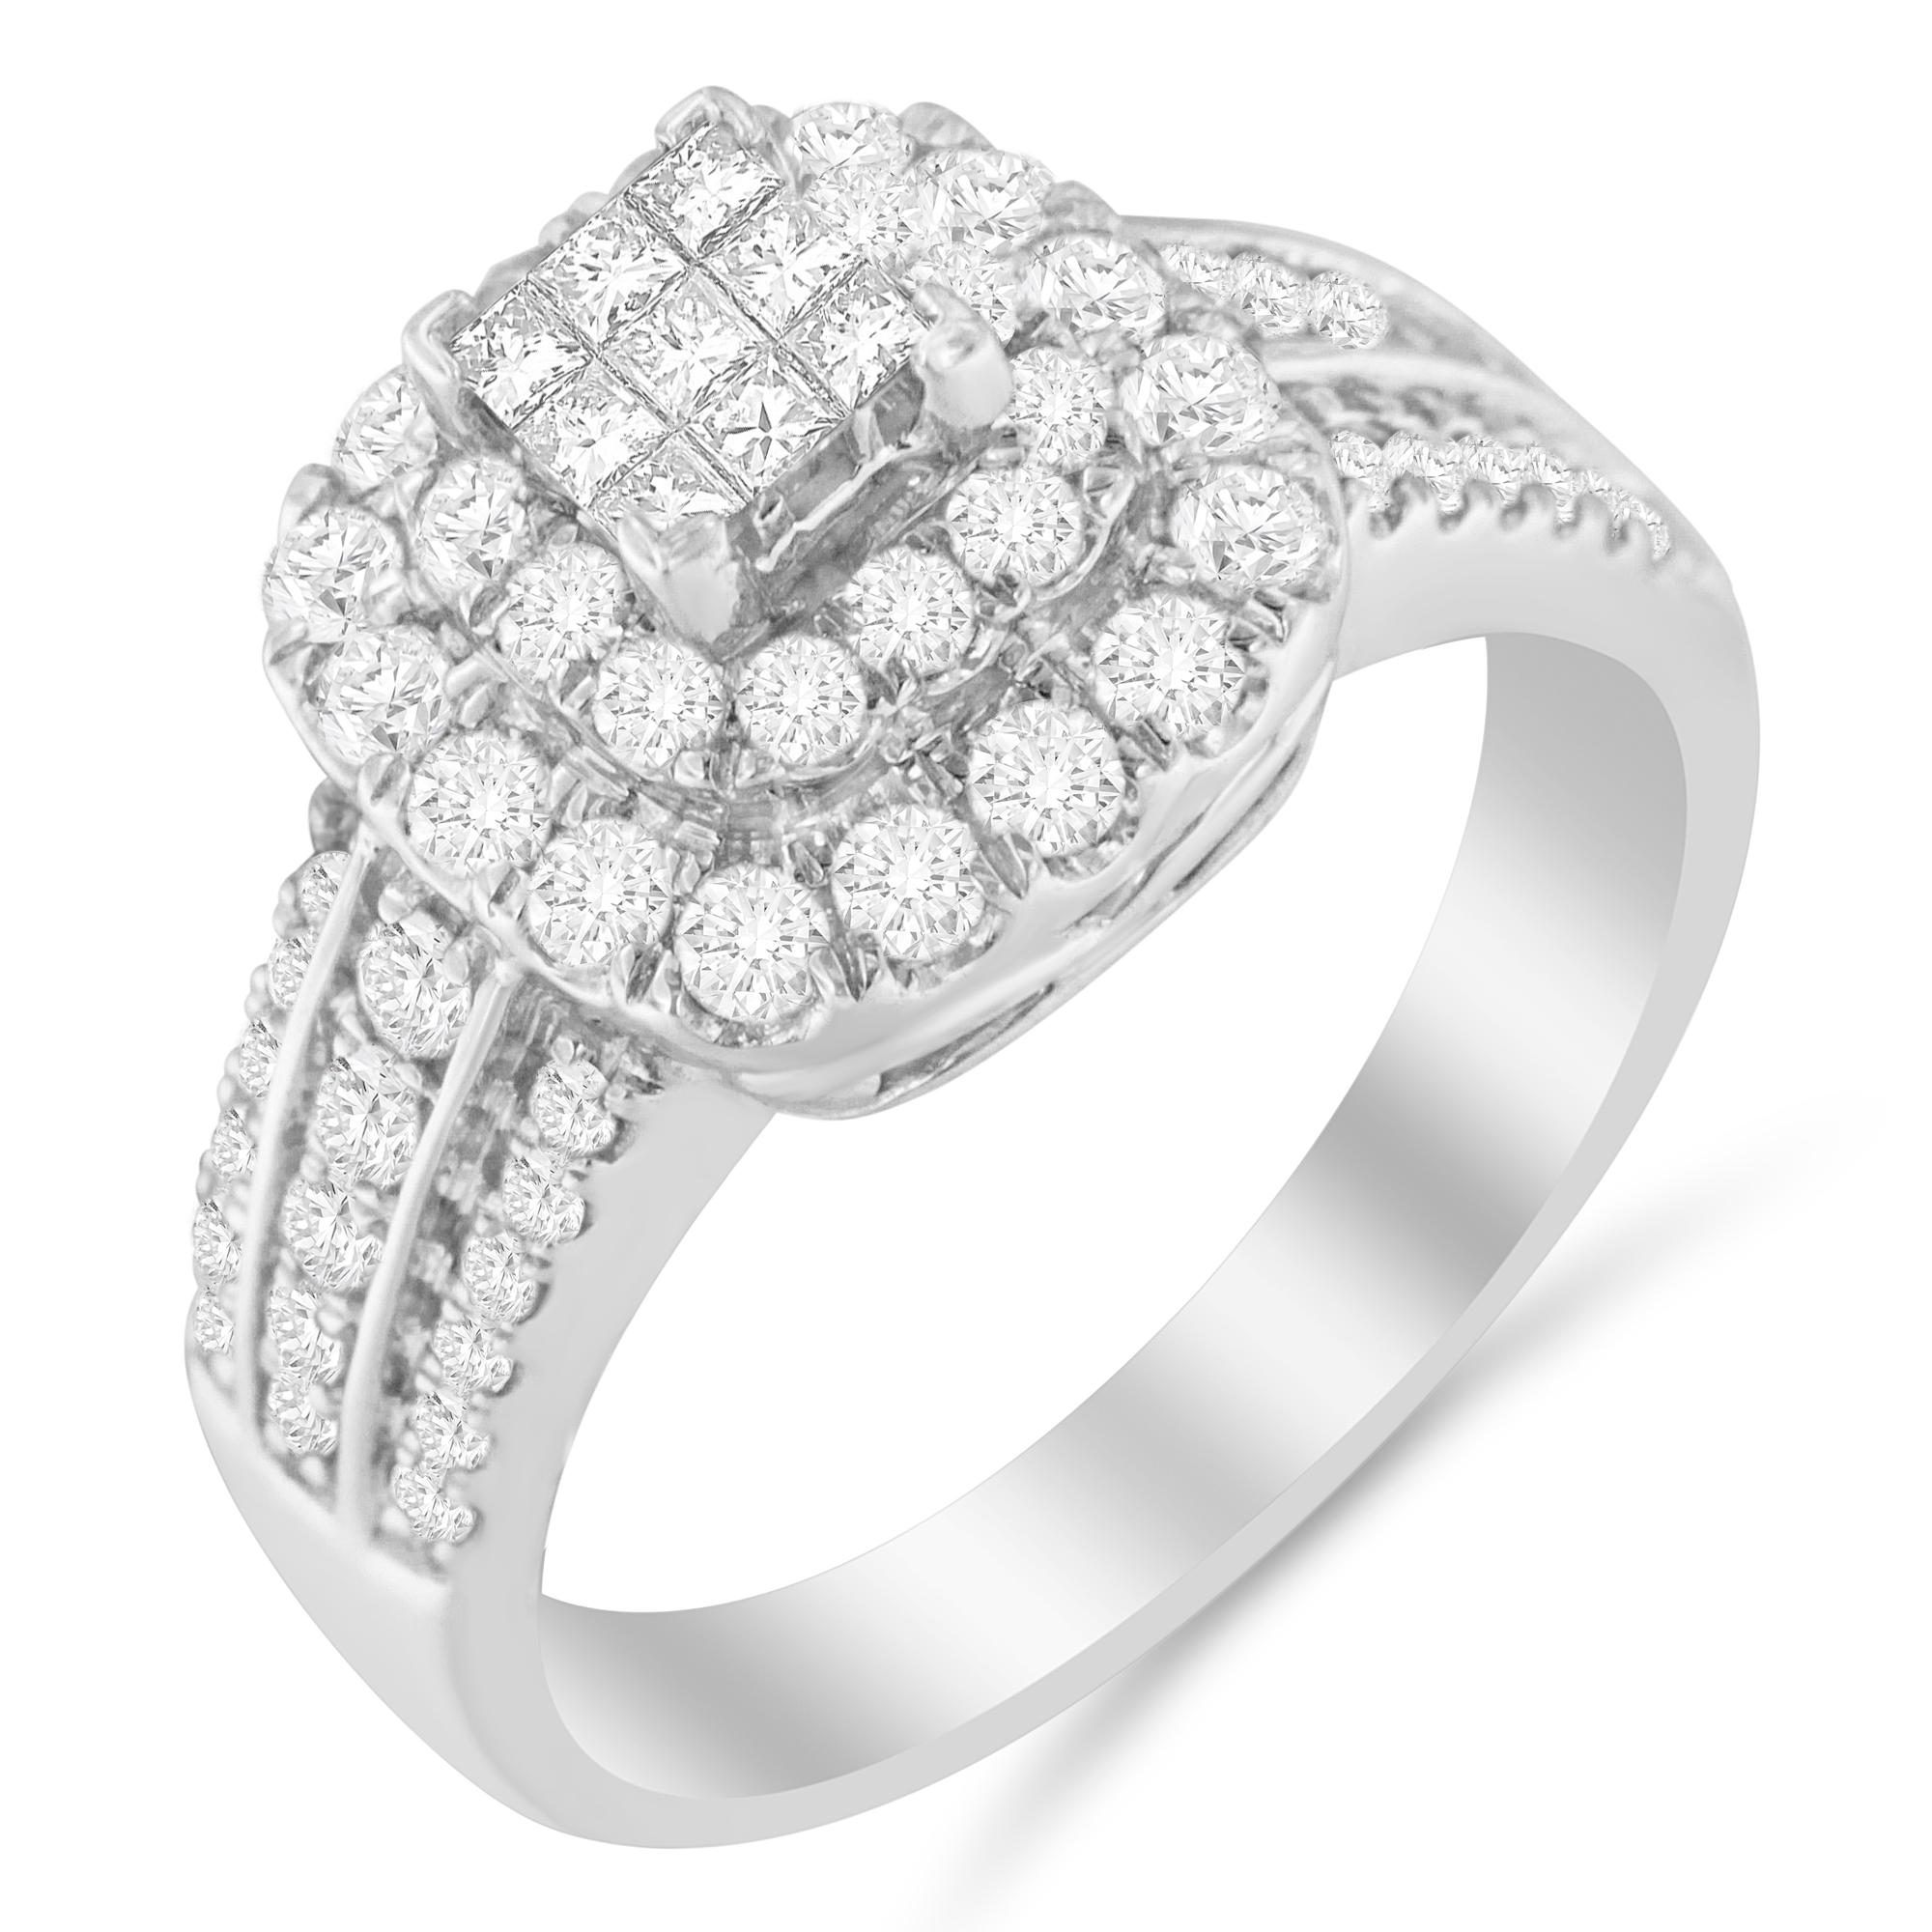 For Sale:  14K White Gold 1.00 Carat Diamond Vintage Ring 5